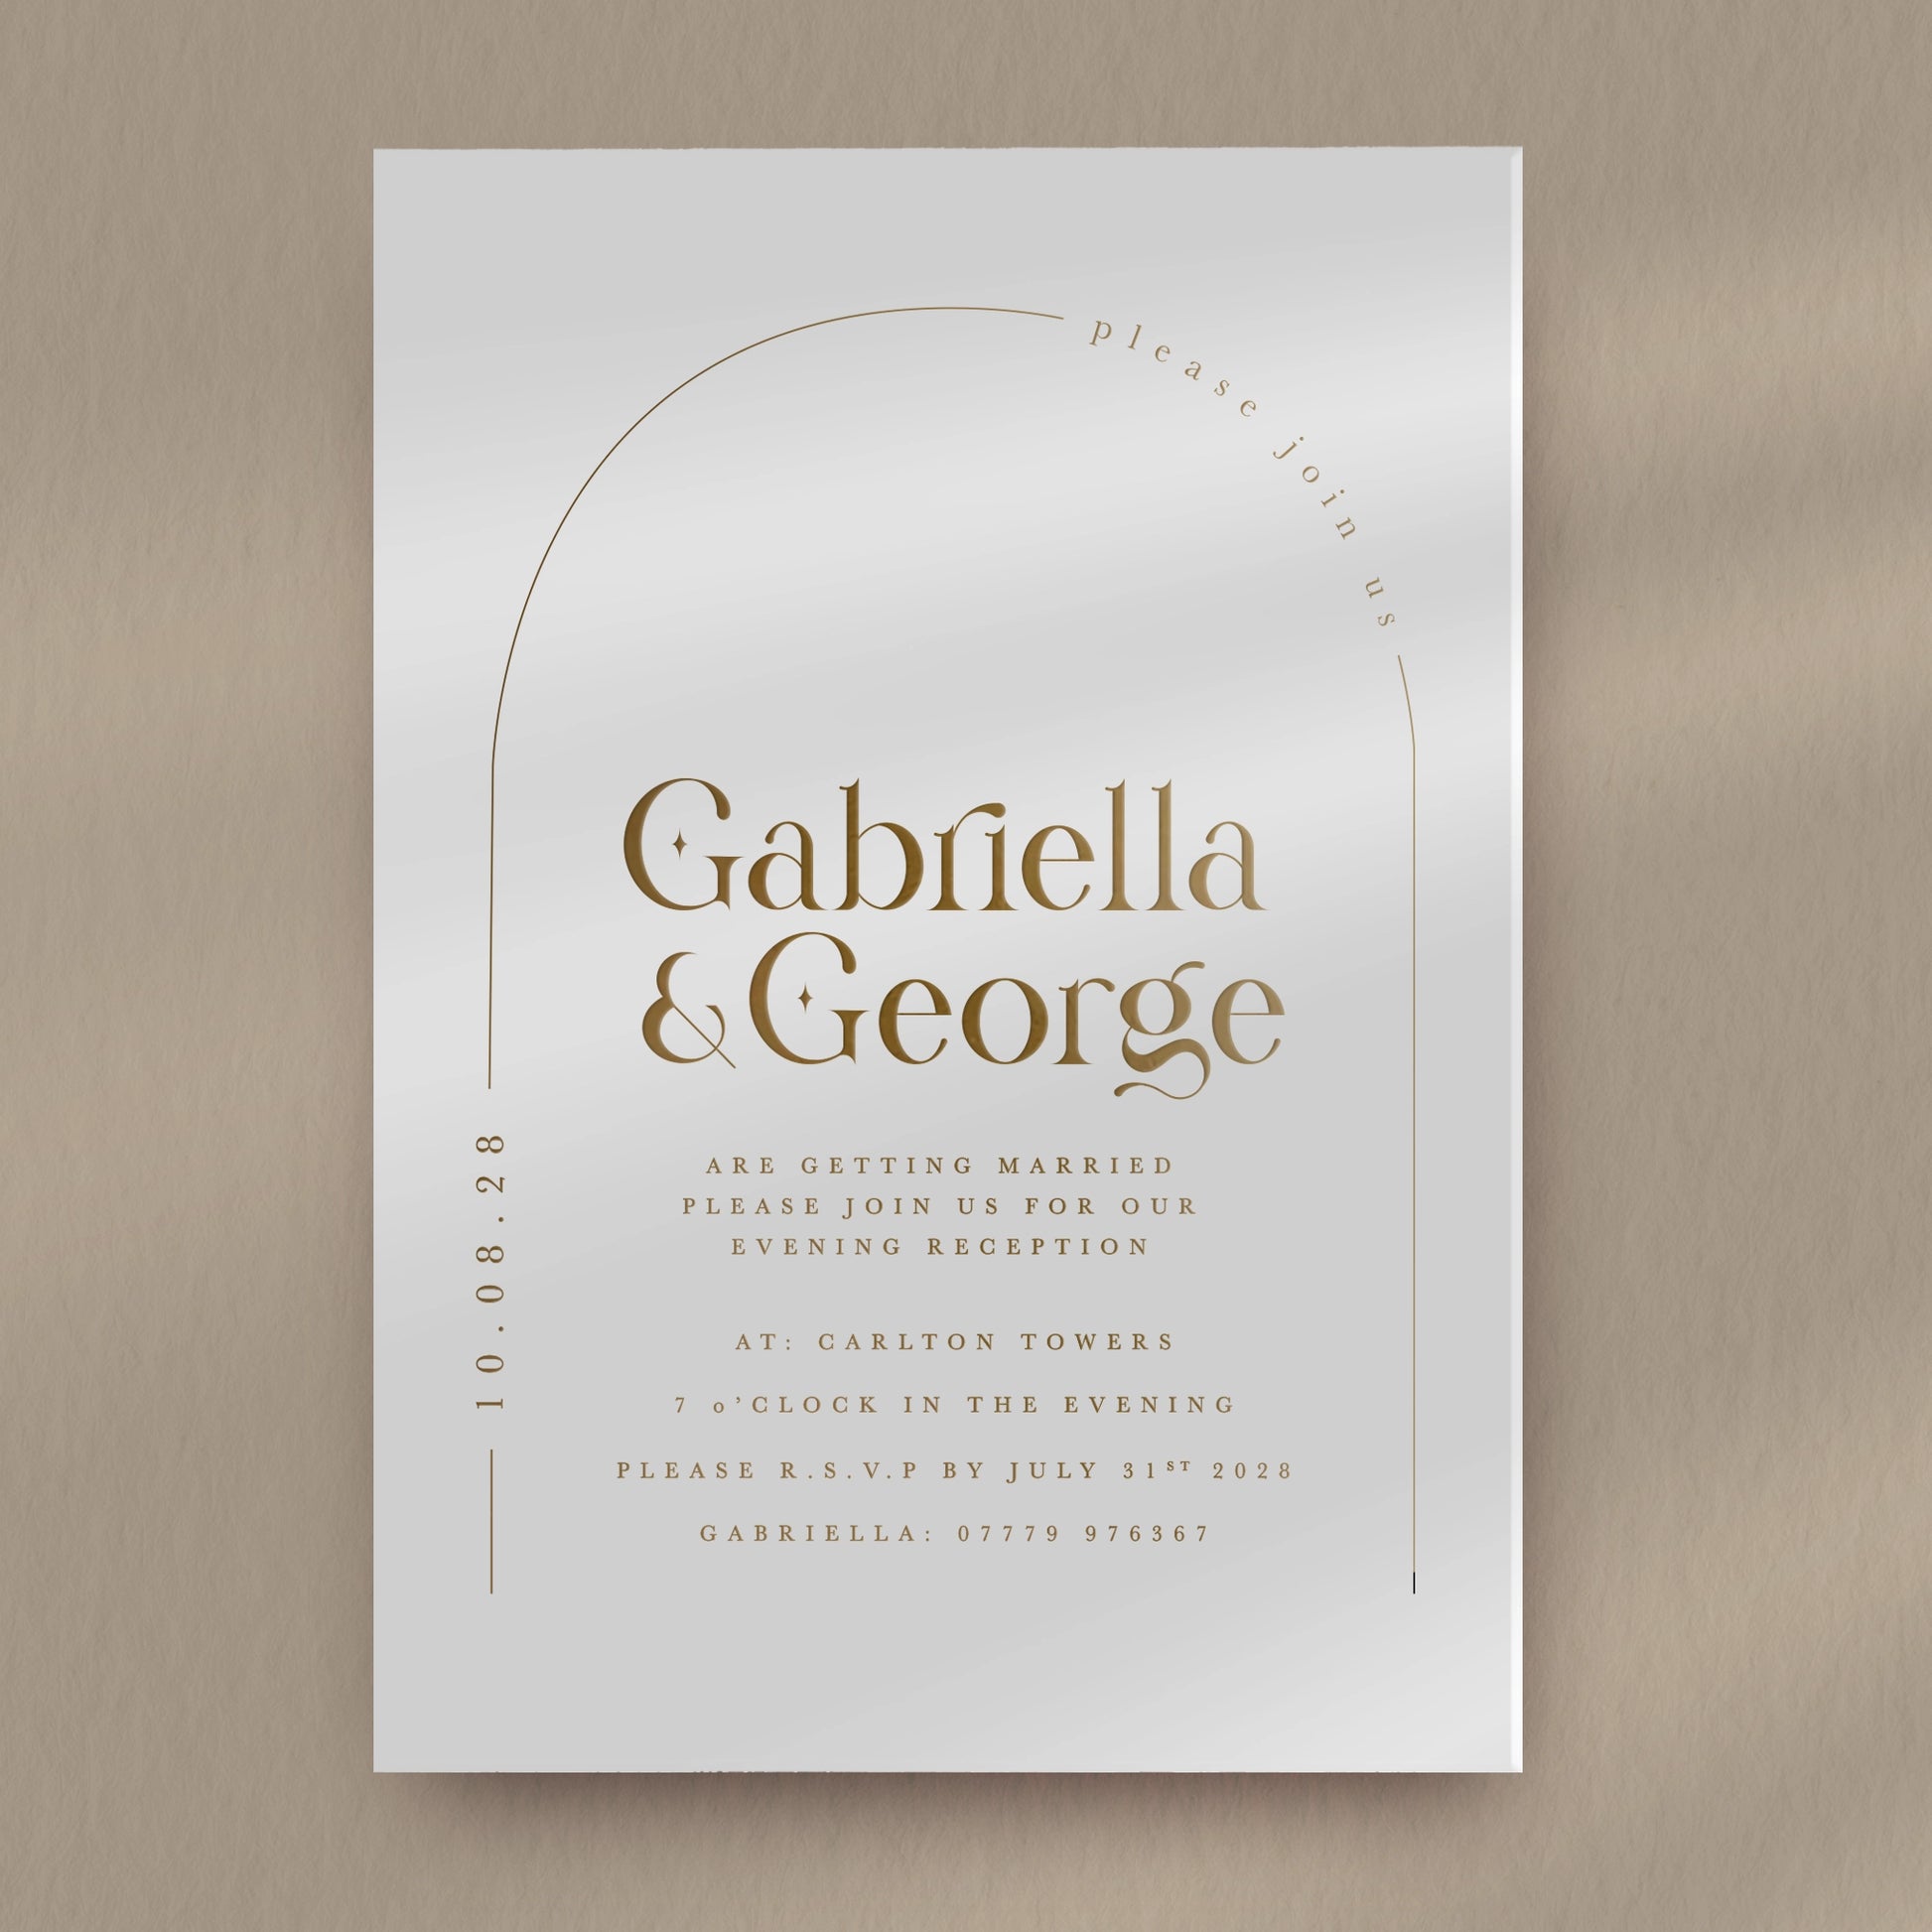 Evening Invitation Sample  Ivy and Gold Wedding Stationery Gabriella  